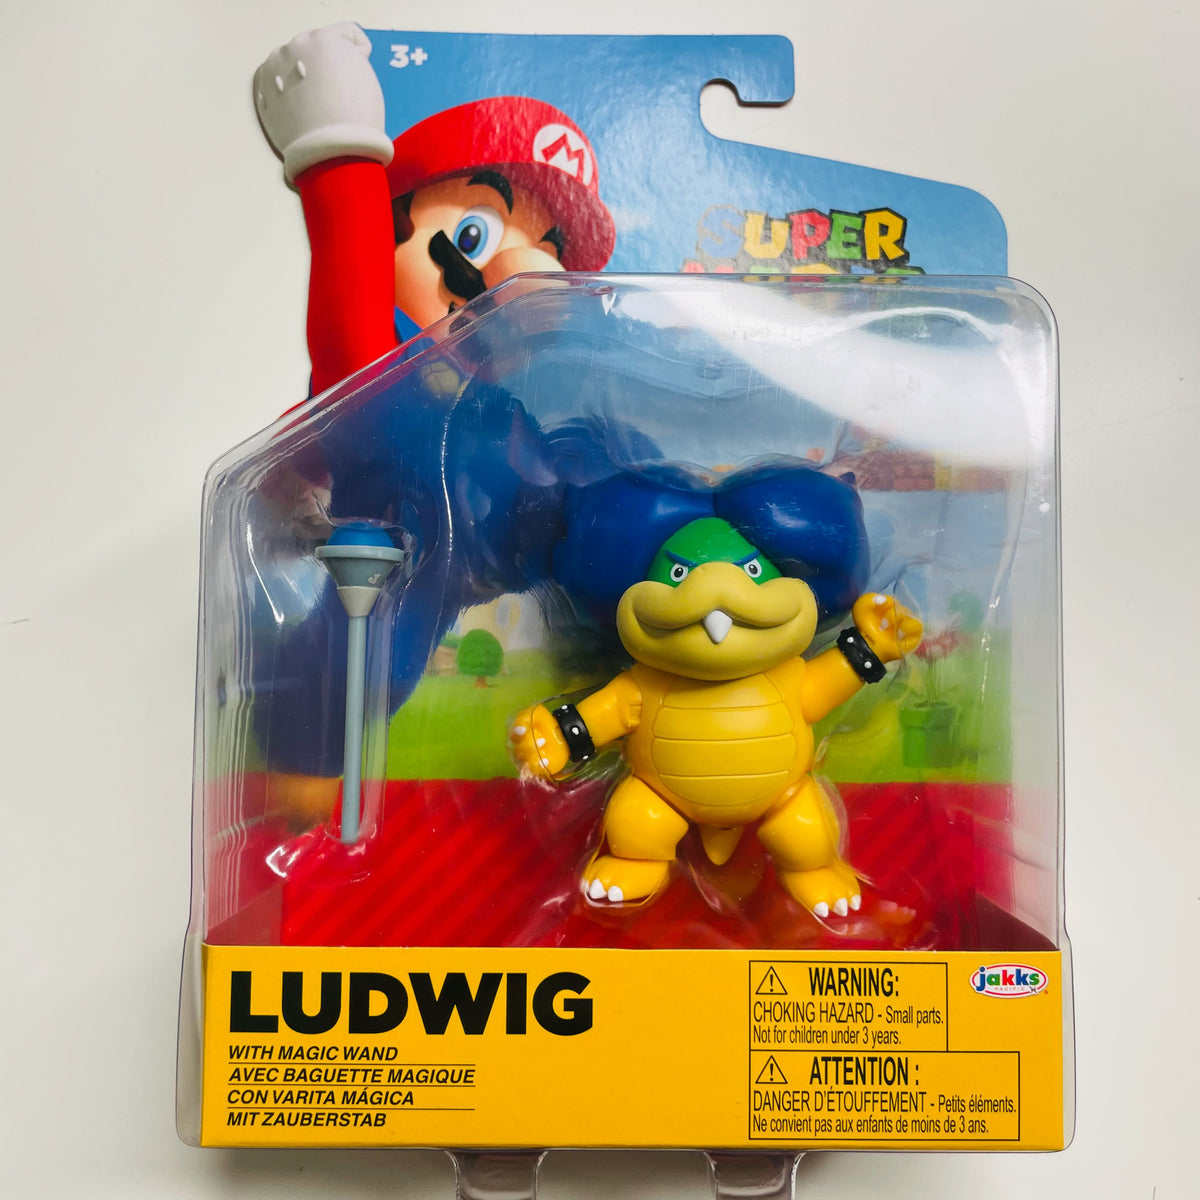 World of Nintendo Super Mario 4-Inch Figures - Ludwig Von Koopa with Wand